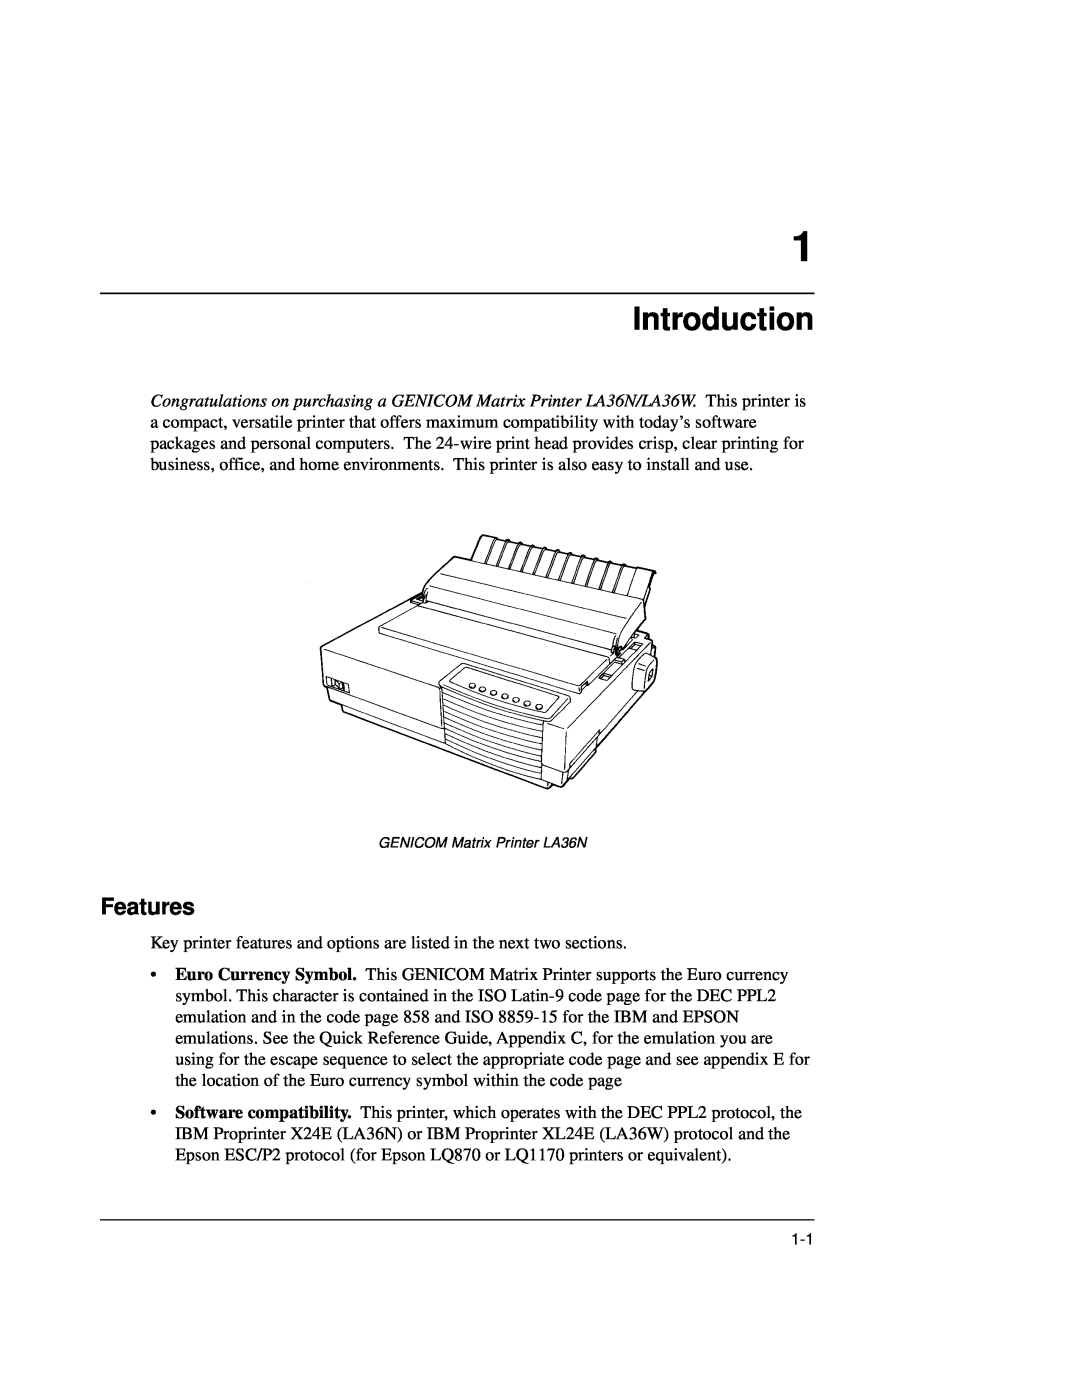 Genicom LA36 manual Introduction, Features 